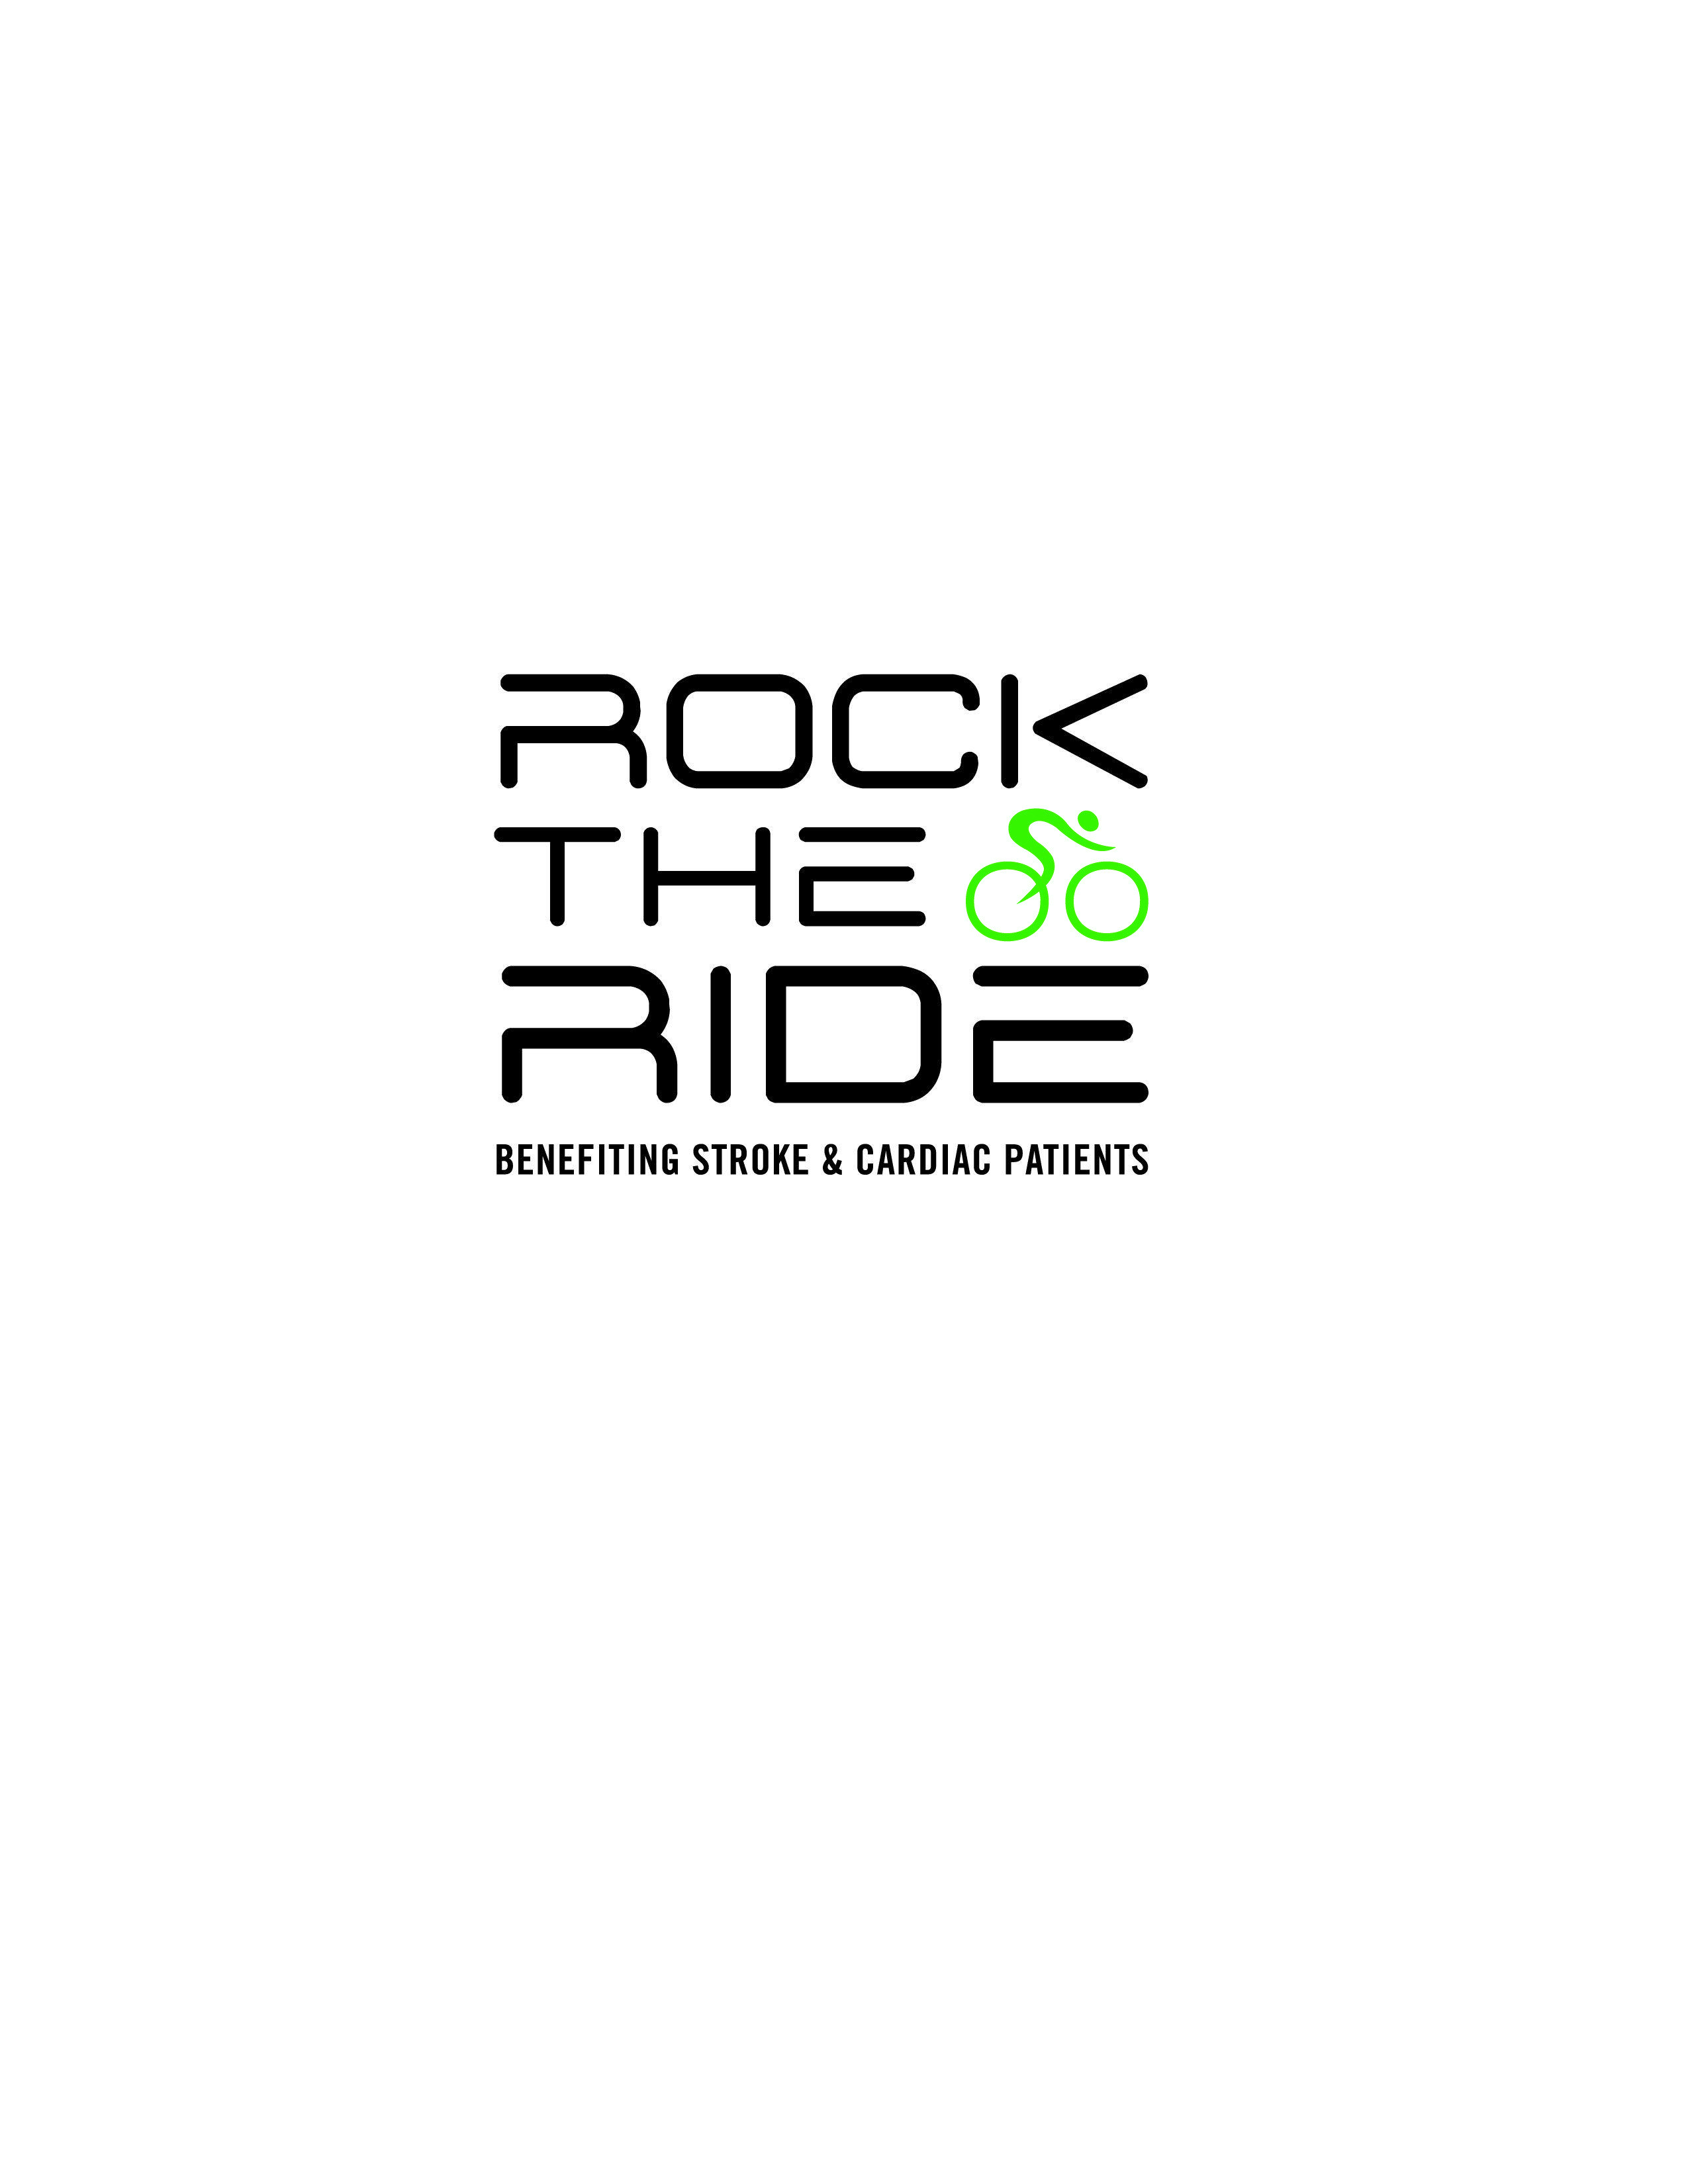 The Ride Logo - rock the ride logo no date. John's Hospital Foundation